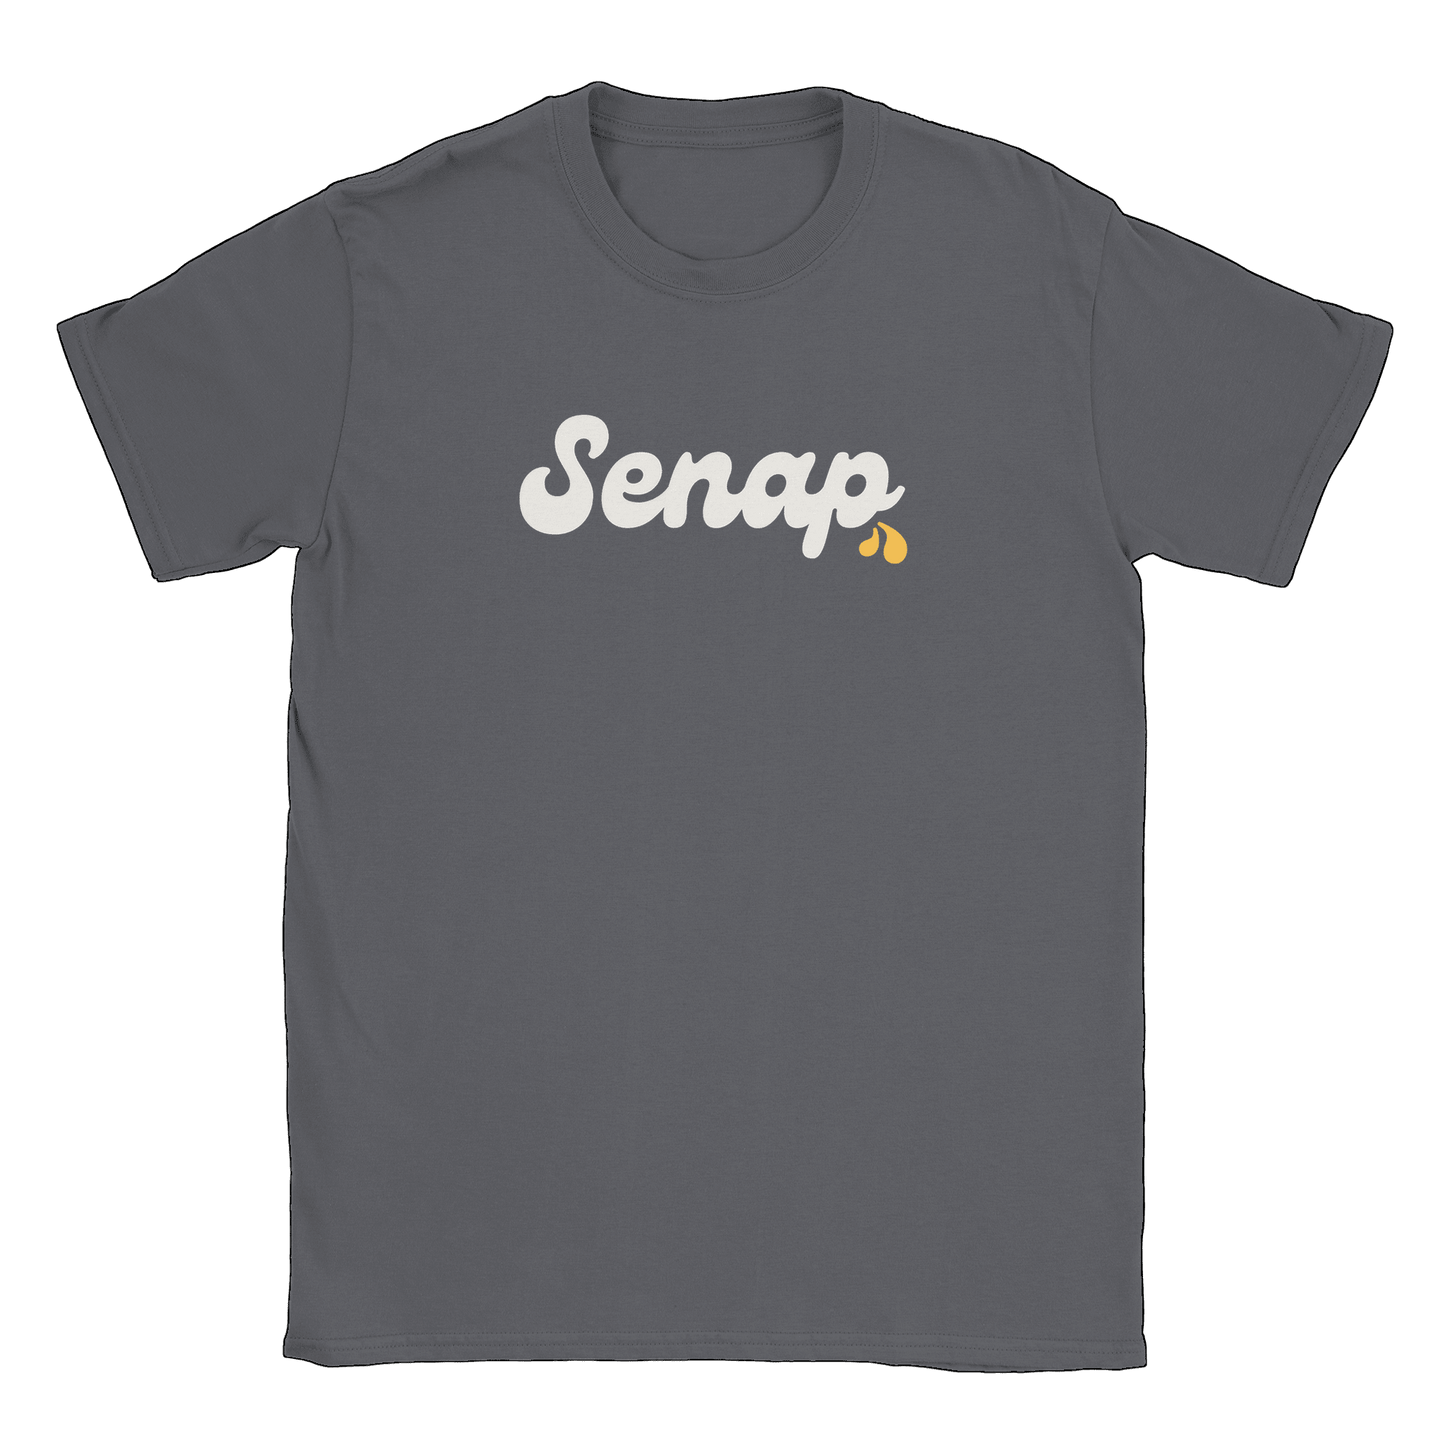 Senap - T-shirt Charcoal